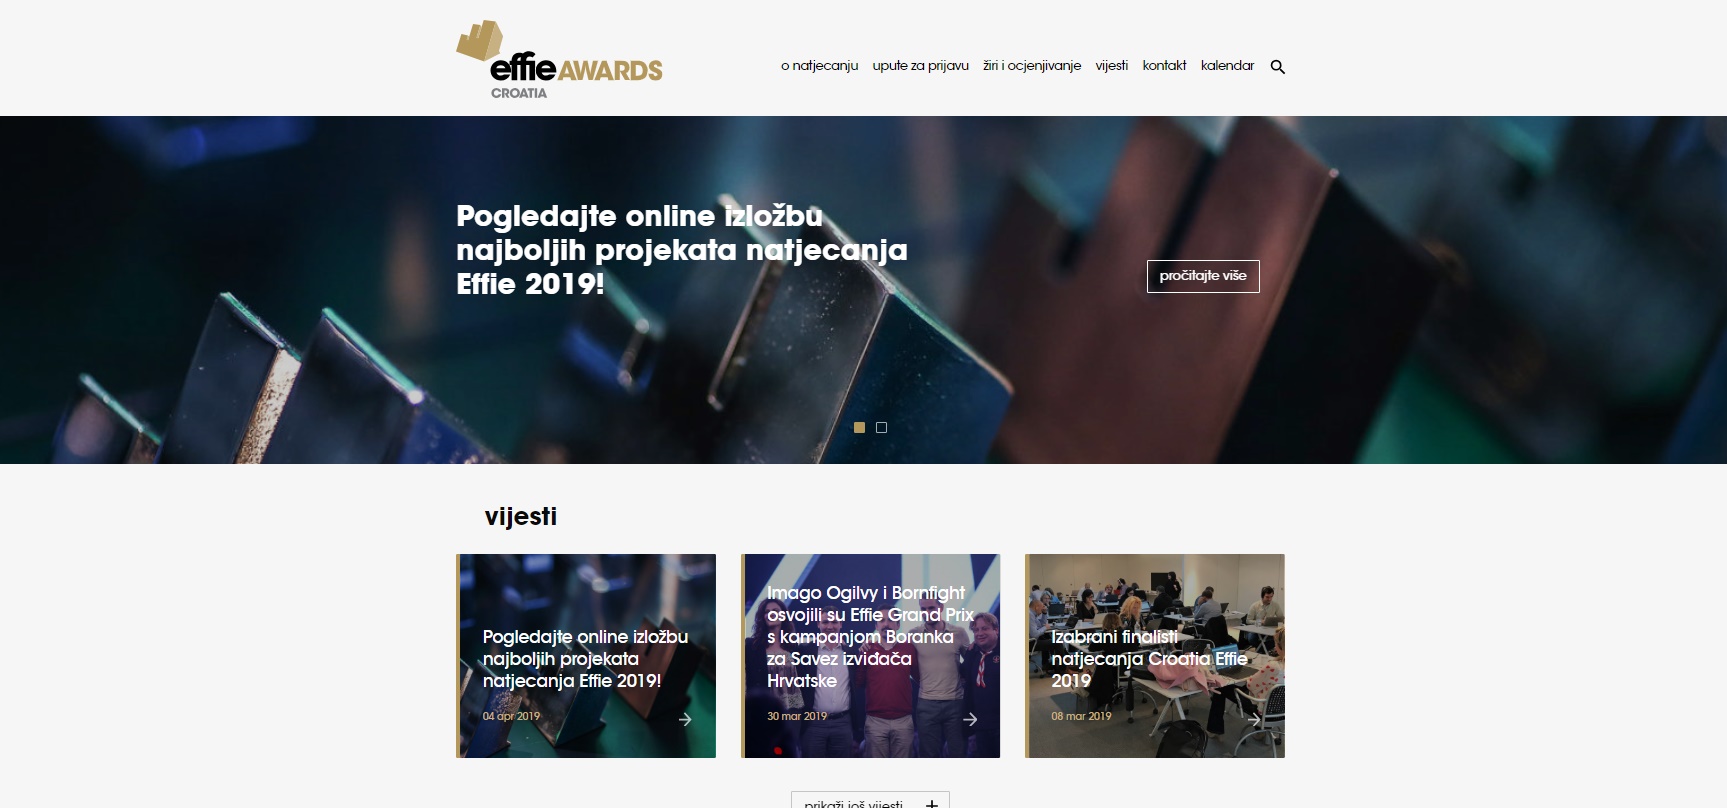 Effie Awards Croatia u novom online ruhu, zahvaljujući web.burzi